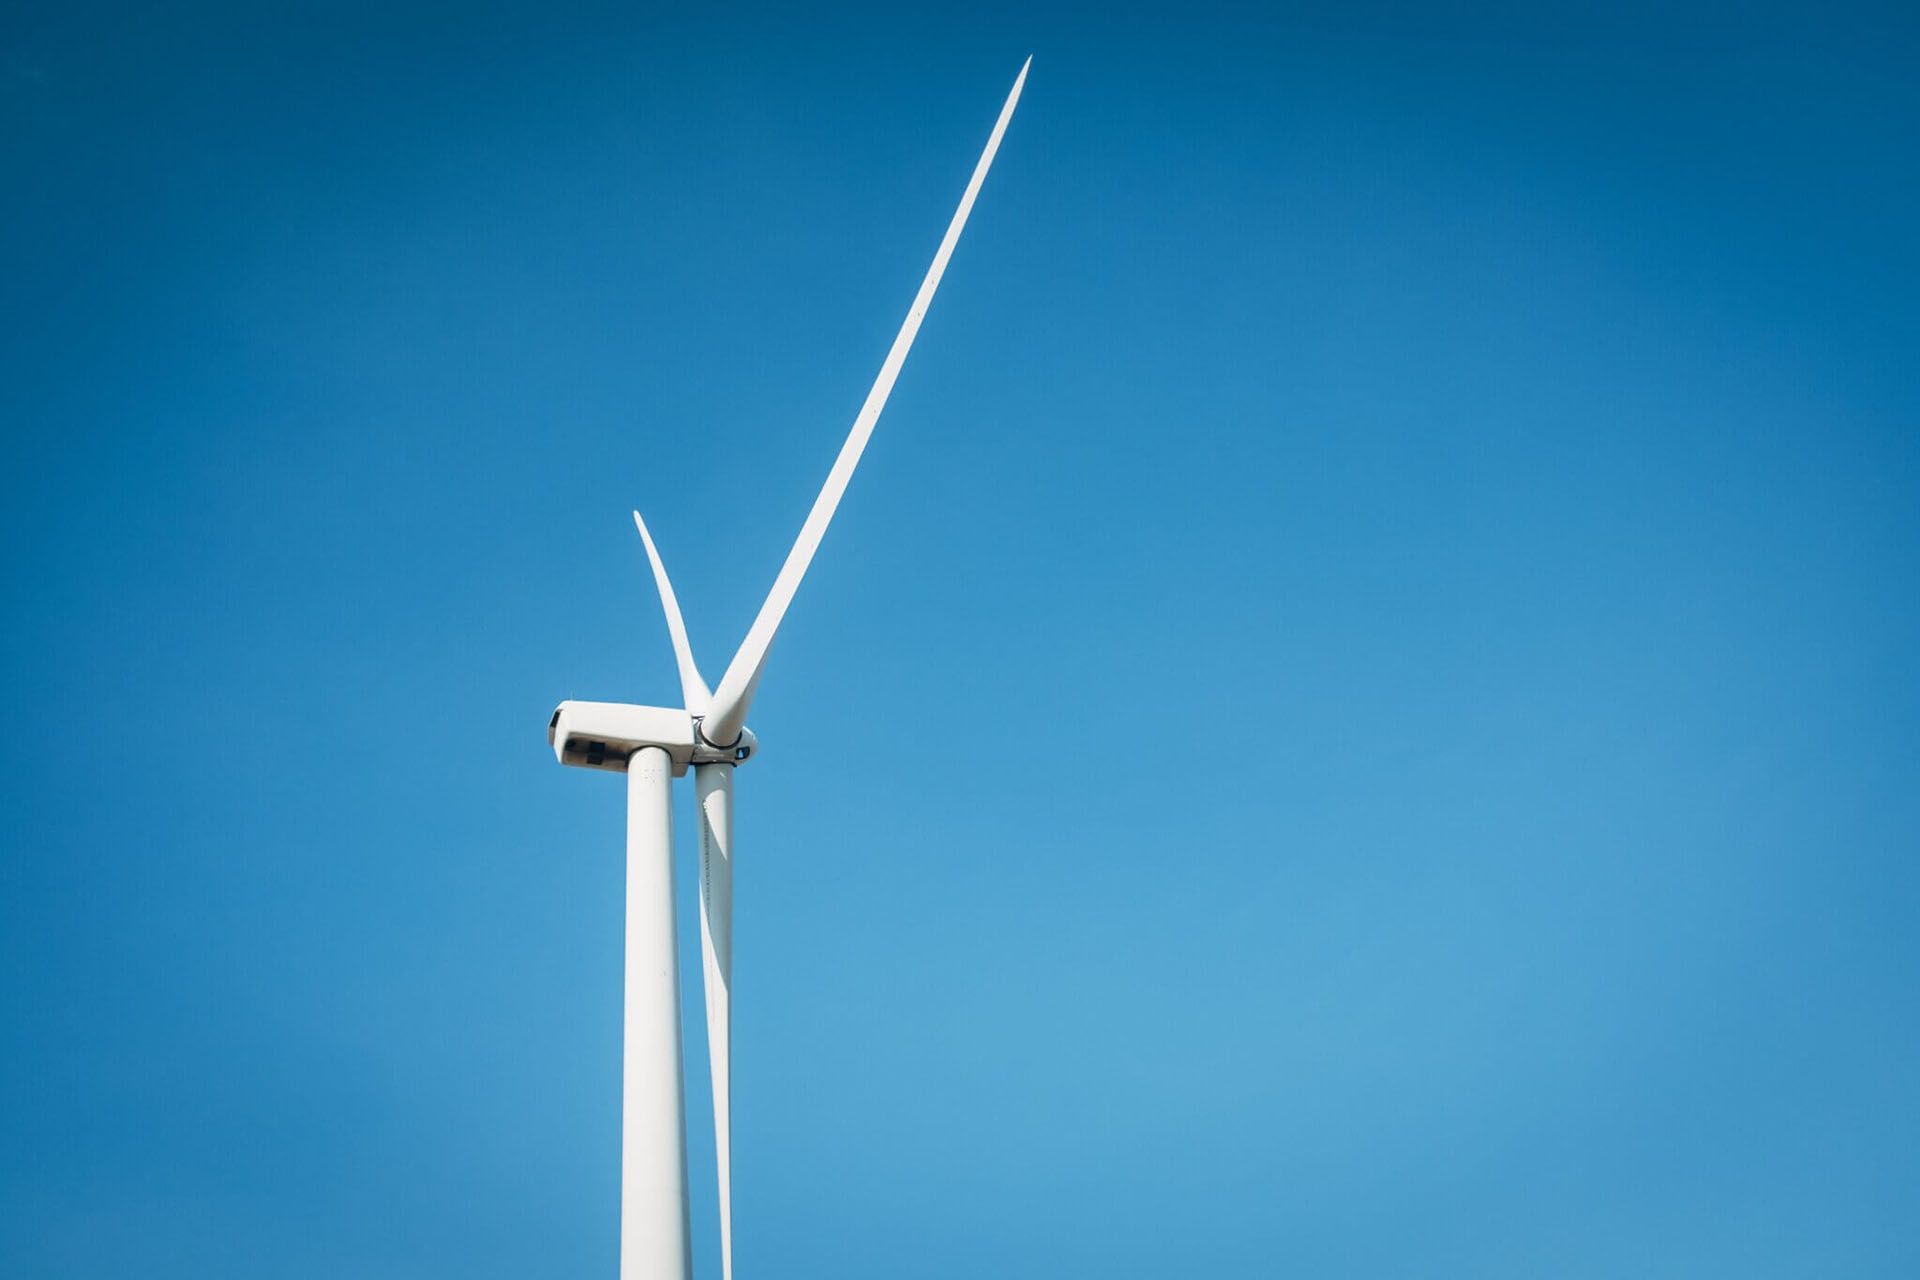 A photo of a single wind turbine against a clear blue sky.